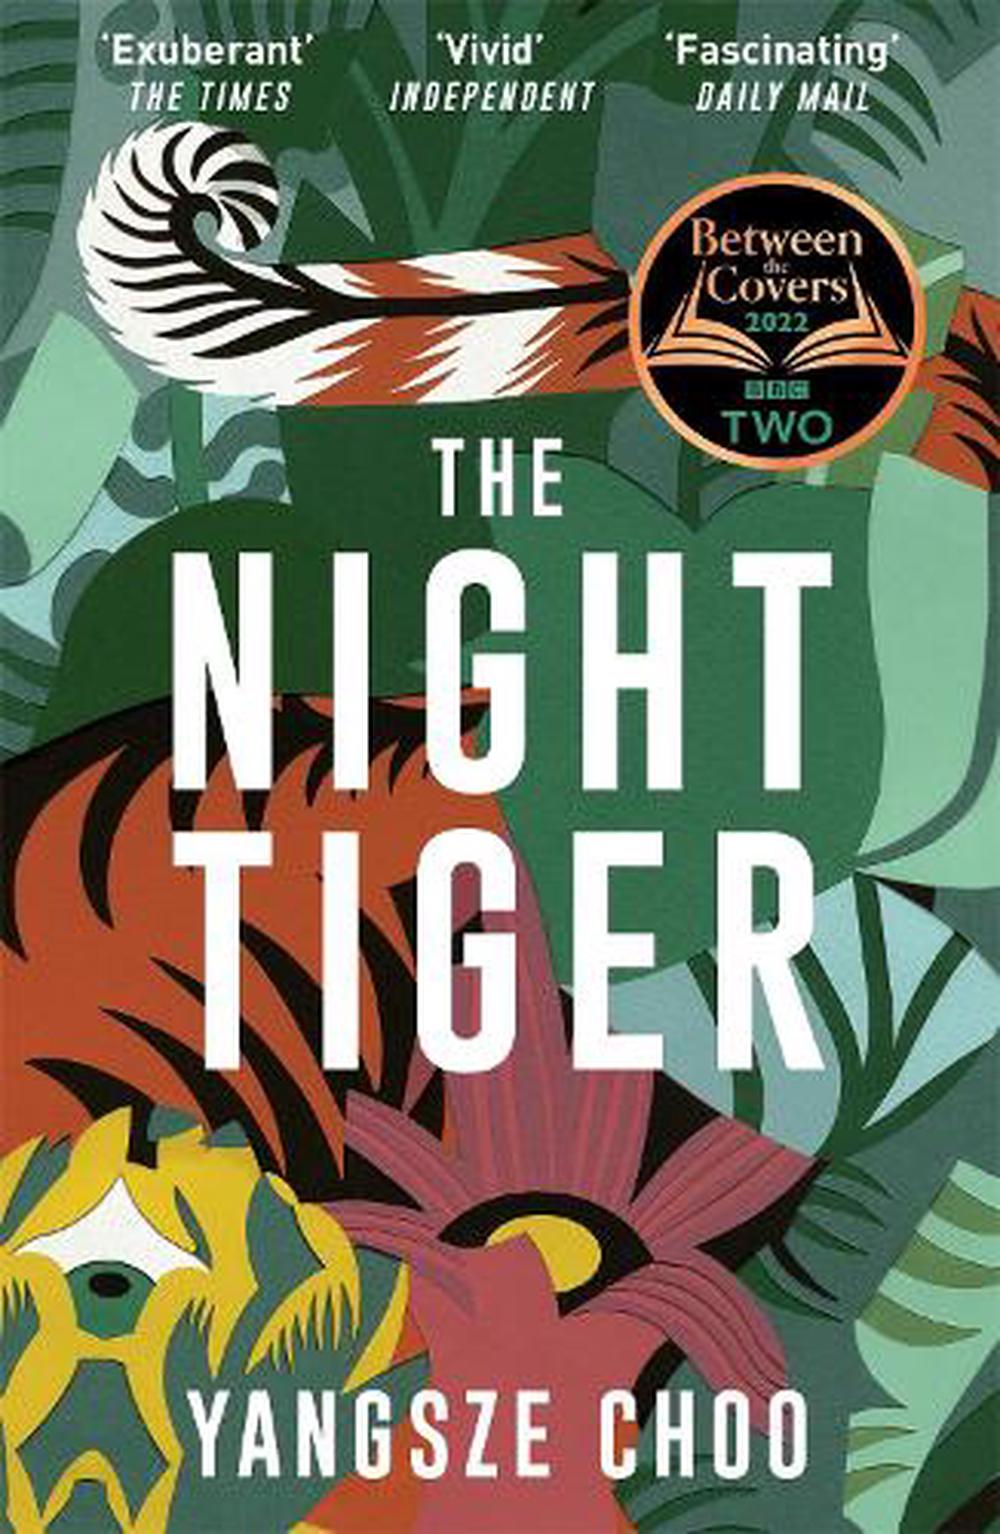 yangsze choo the night tiger a novel